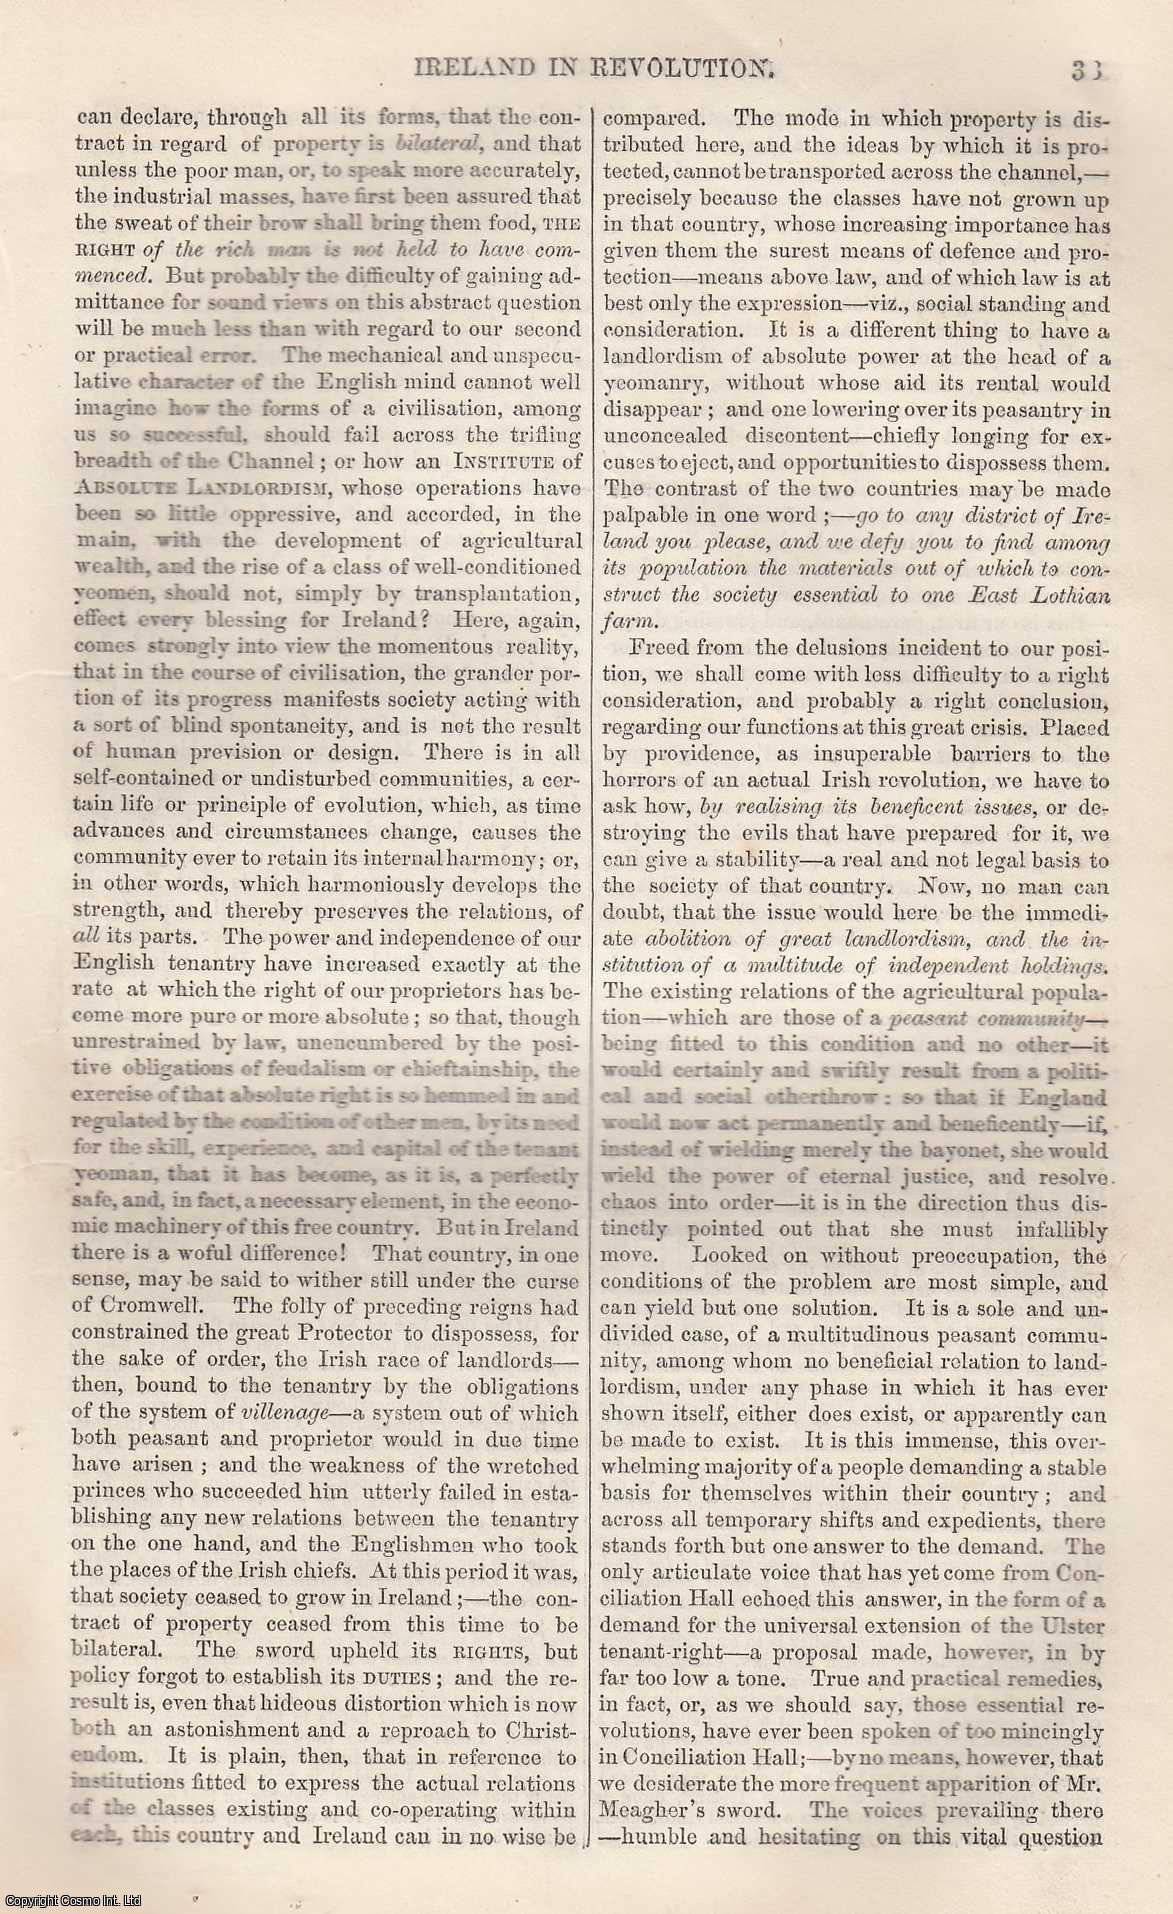 --- - Ireland in Revolution. An original article from Tait's Edinburgh Magazine, 1847.